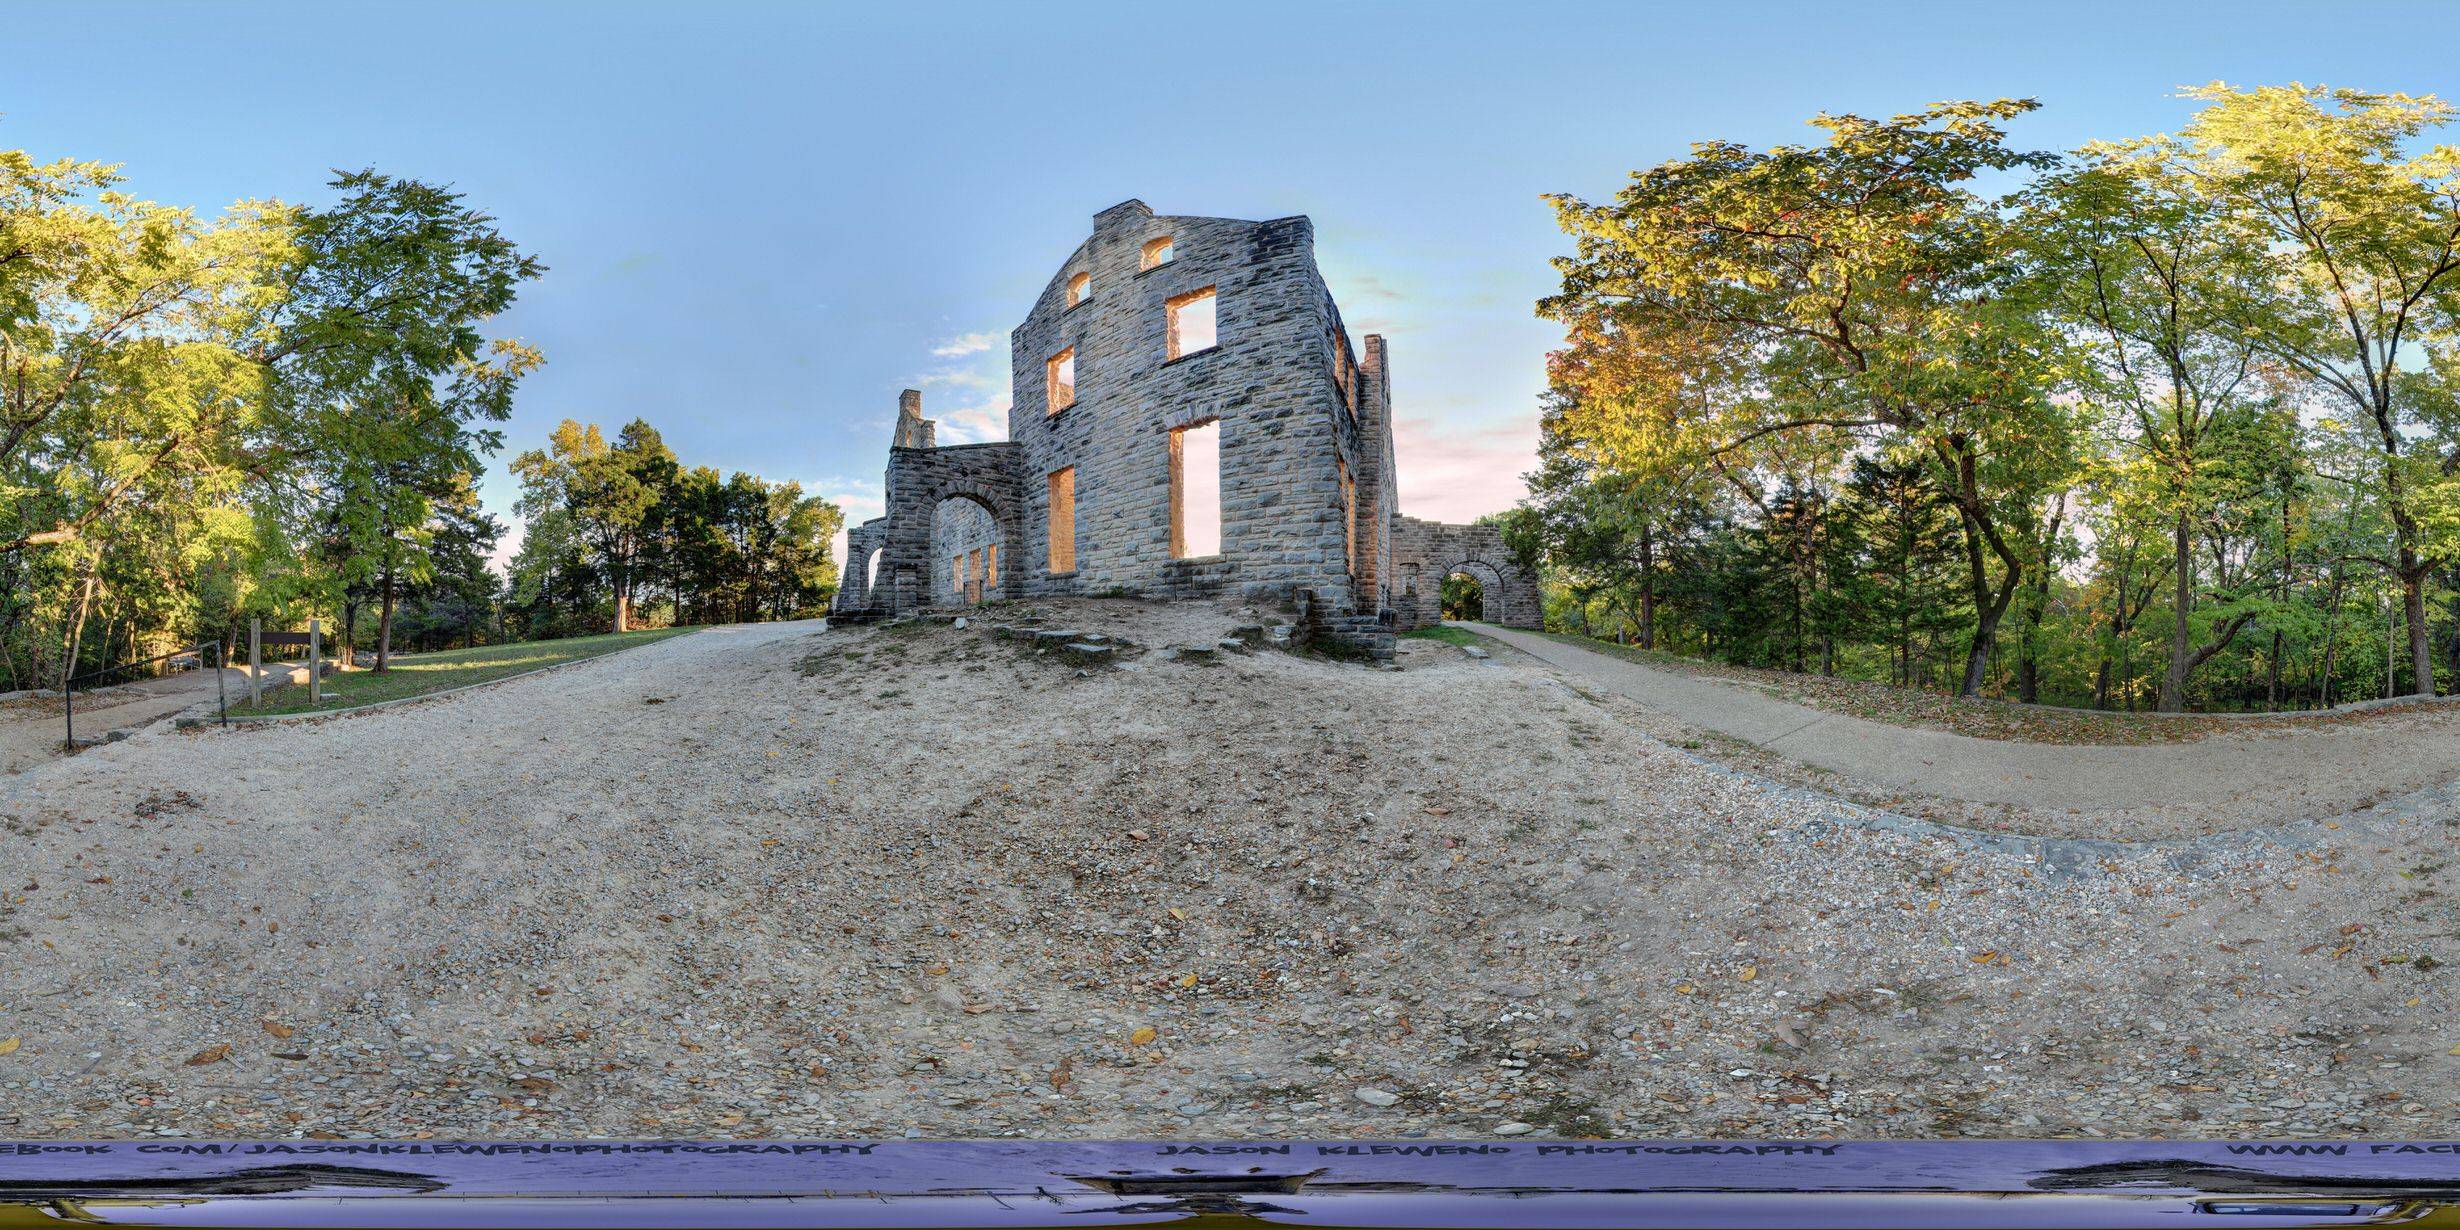 A 360-degree spherical panoramic of the Ha Ha Tonka Castle Ruins in Missouri. Image by Majik Photo & Video